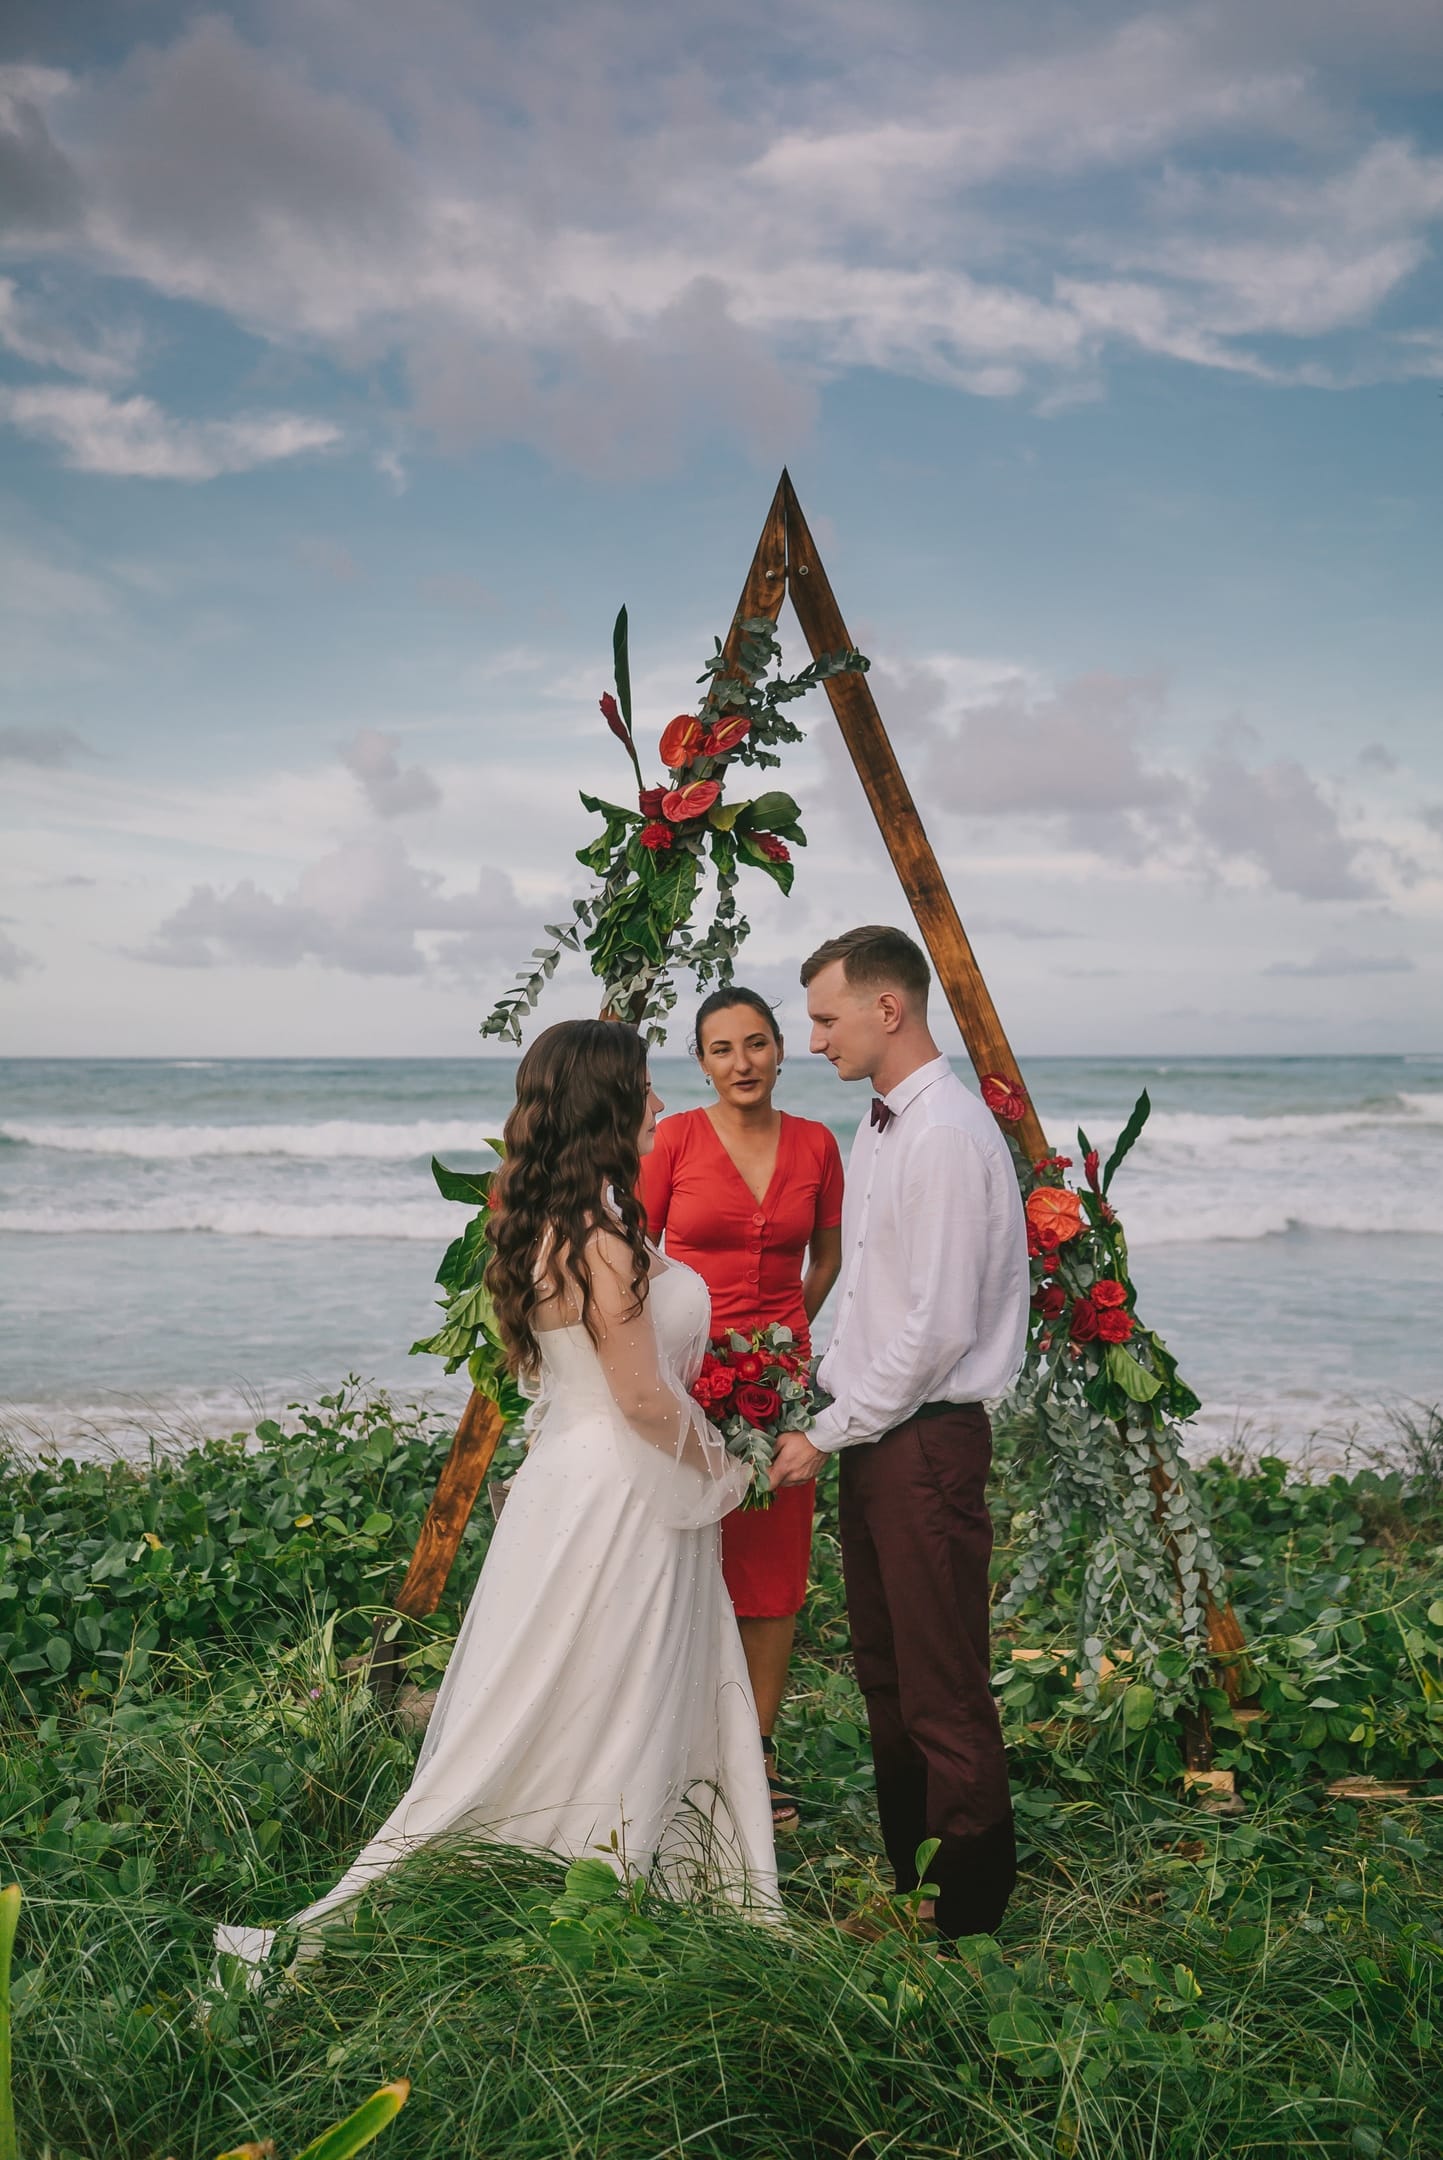 свадебная церемония в Доминикане на фоне океана